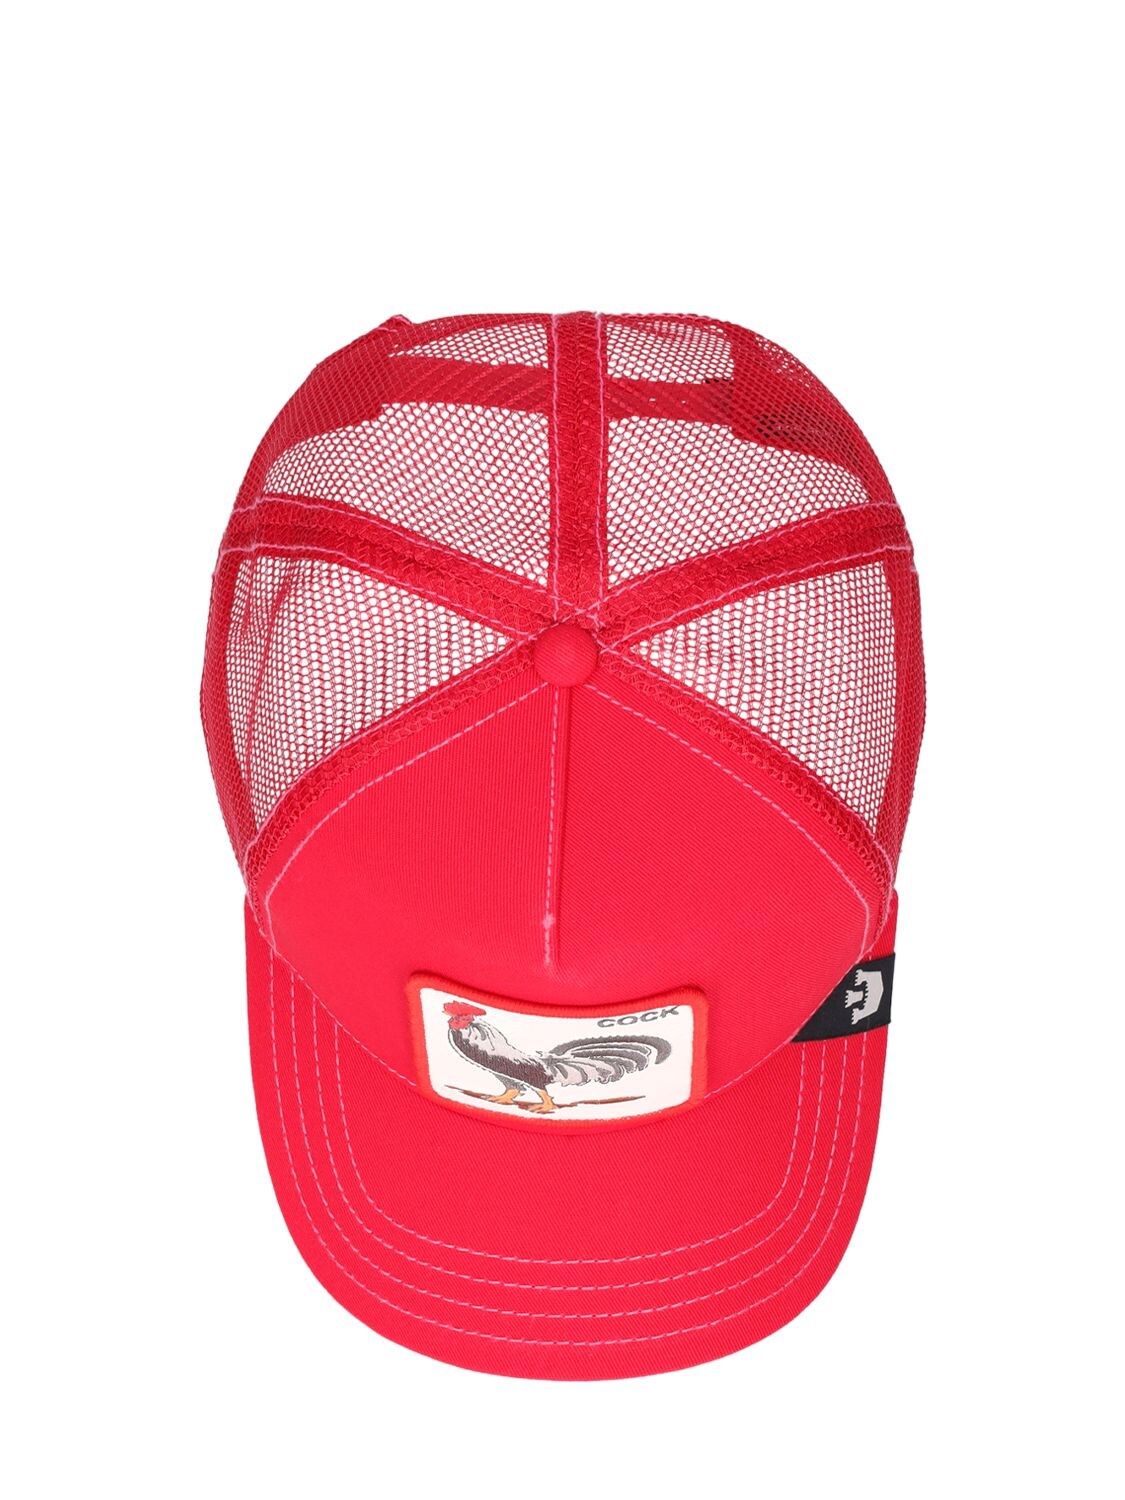 Shop Goorin Bros Red Cock Trucker Cap In Red,multi